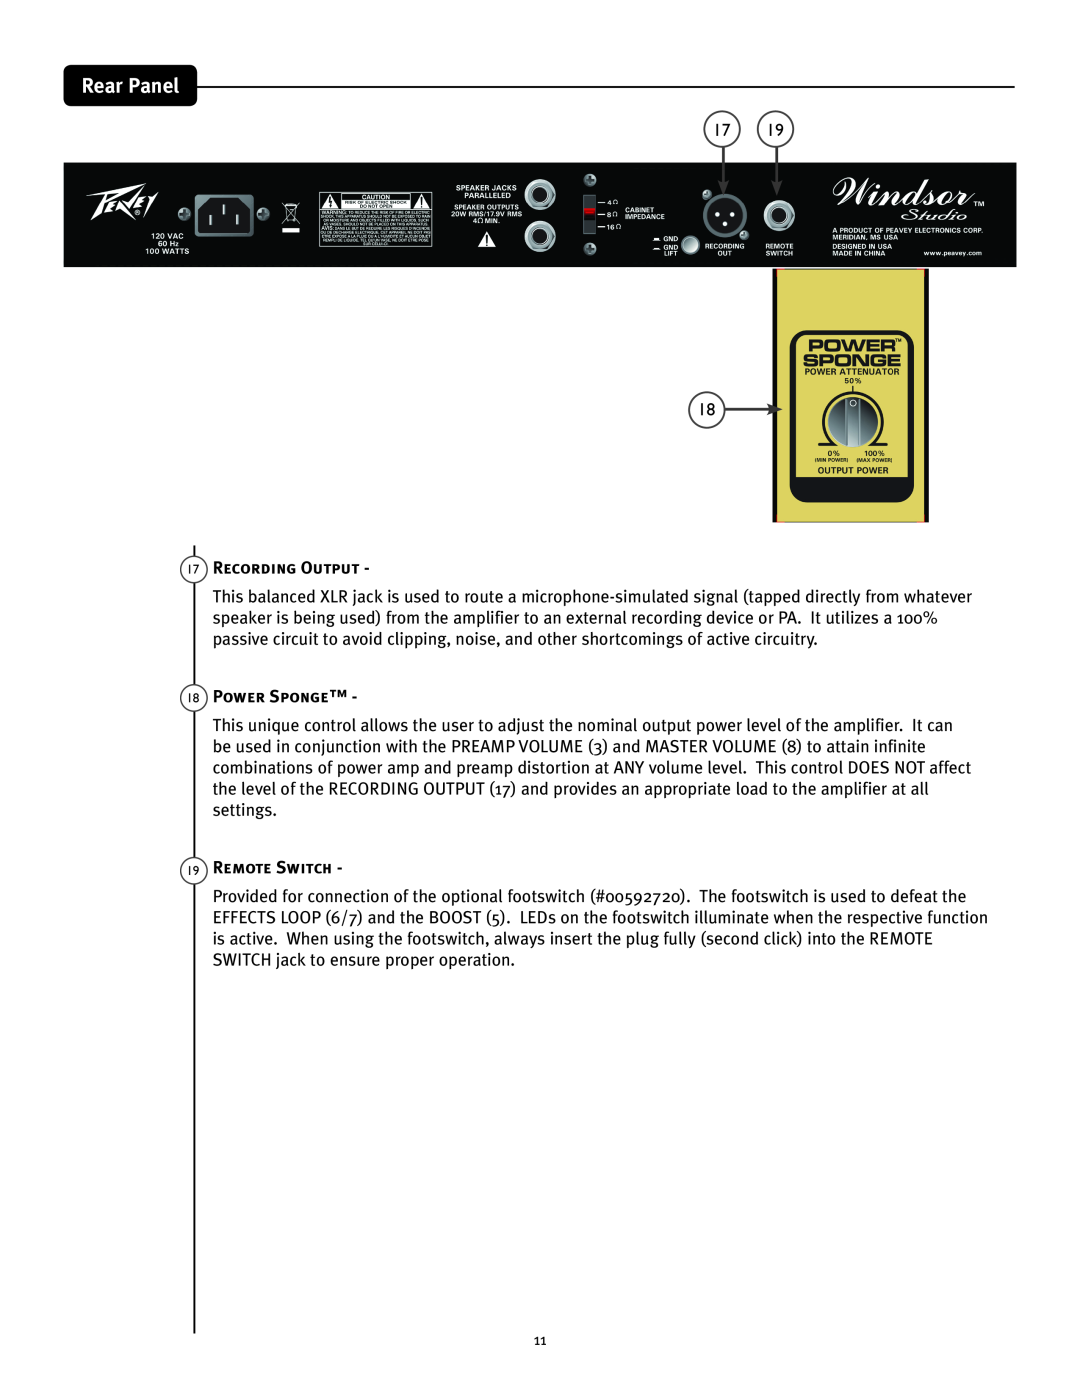 Peavey Studio manual Rear Panel, 17Recording Output, 18Power Sponge, 19Remote Switch 